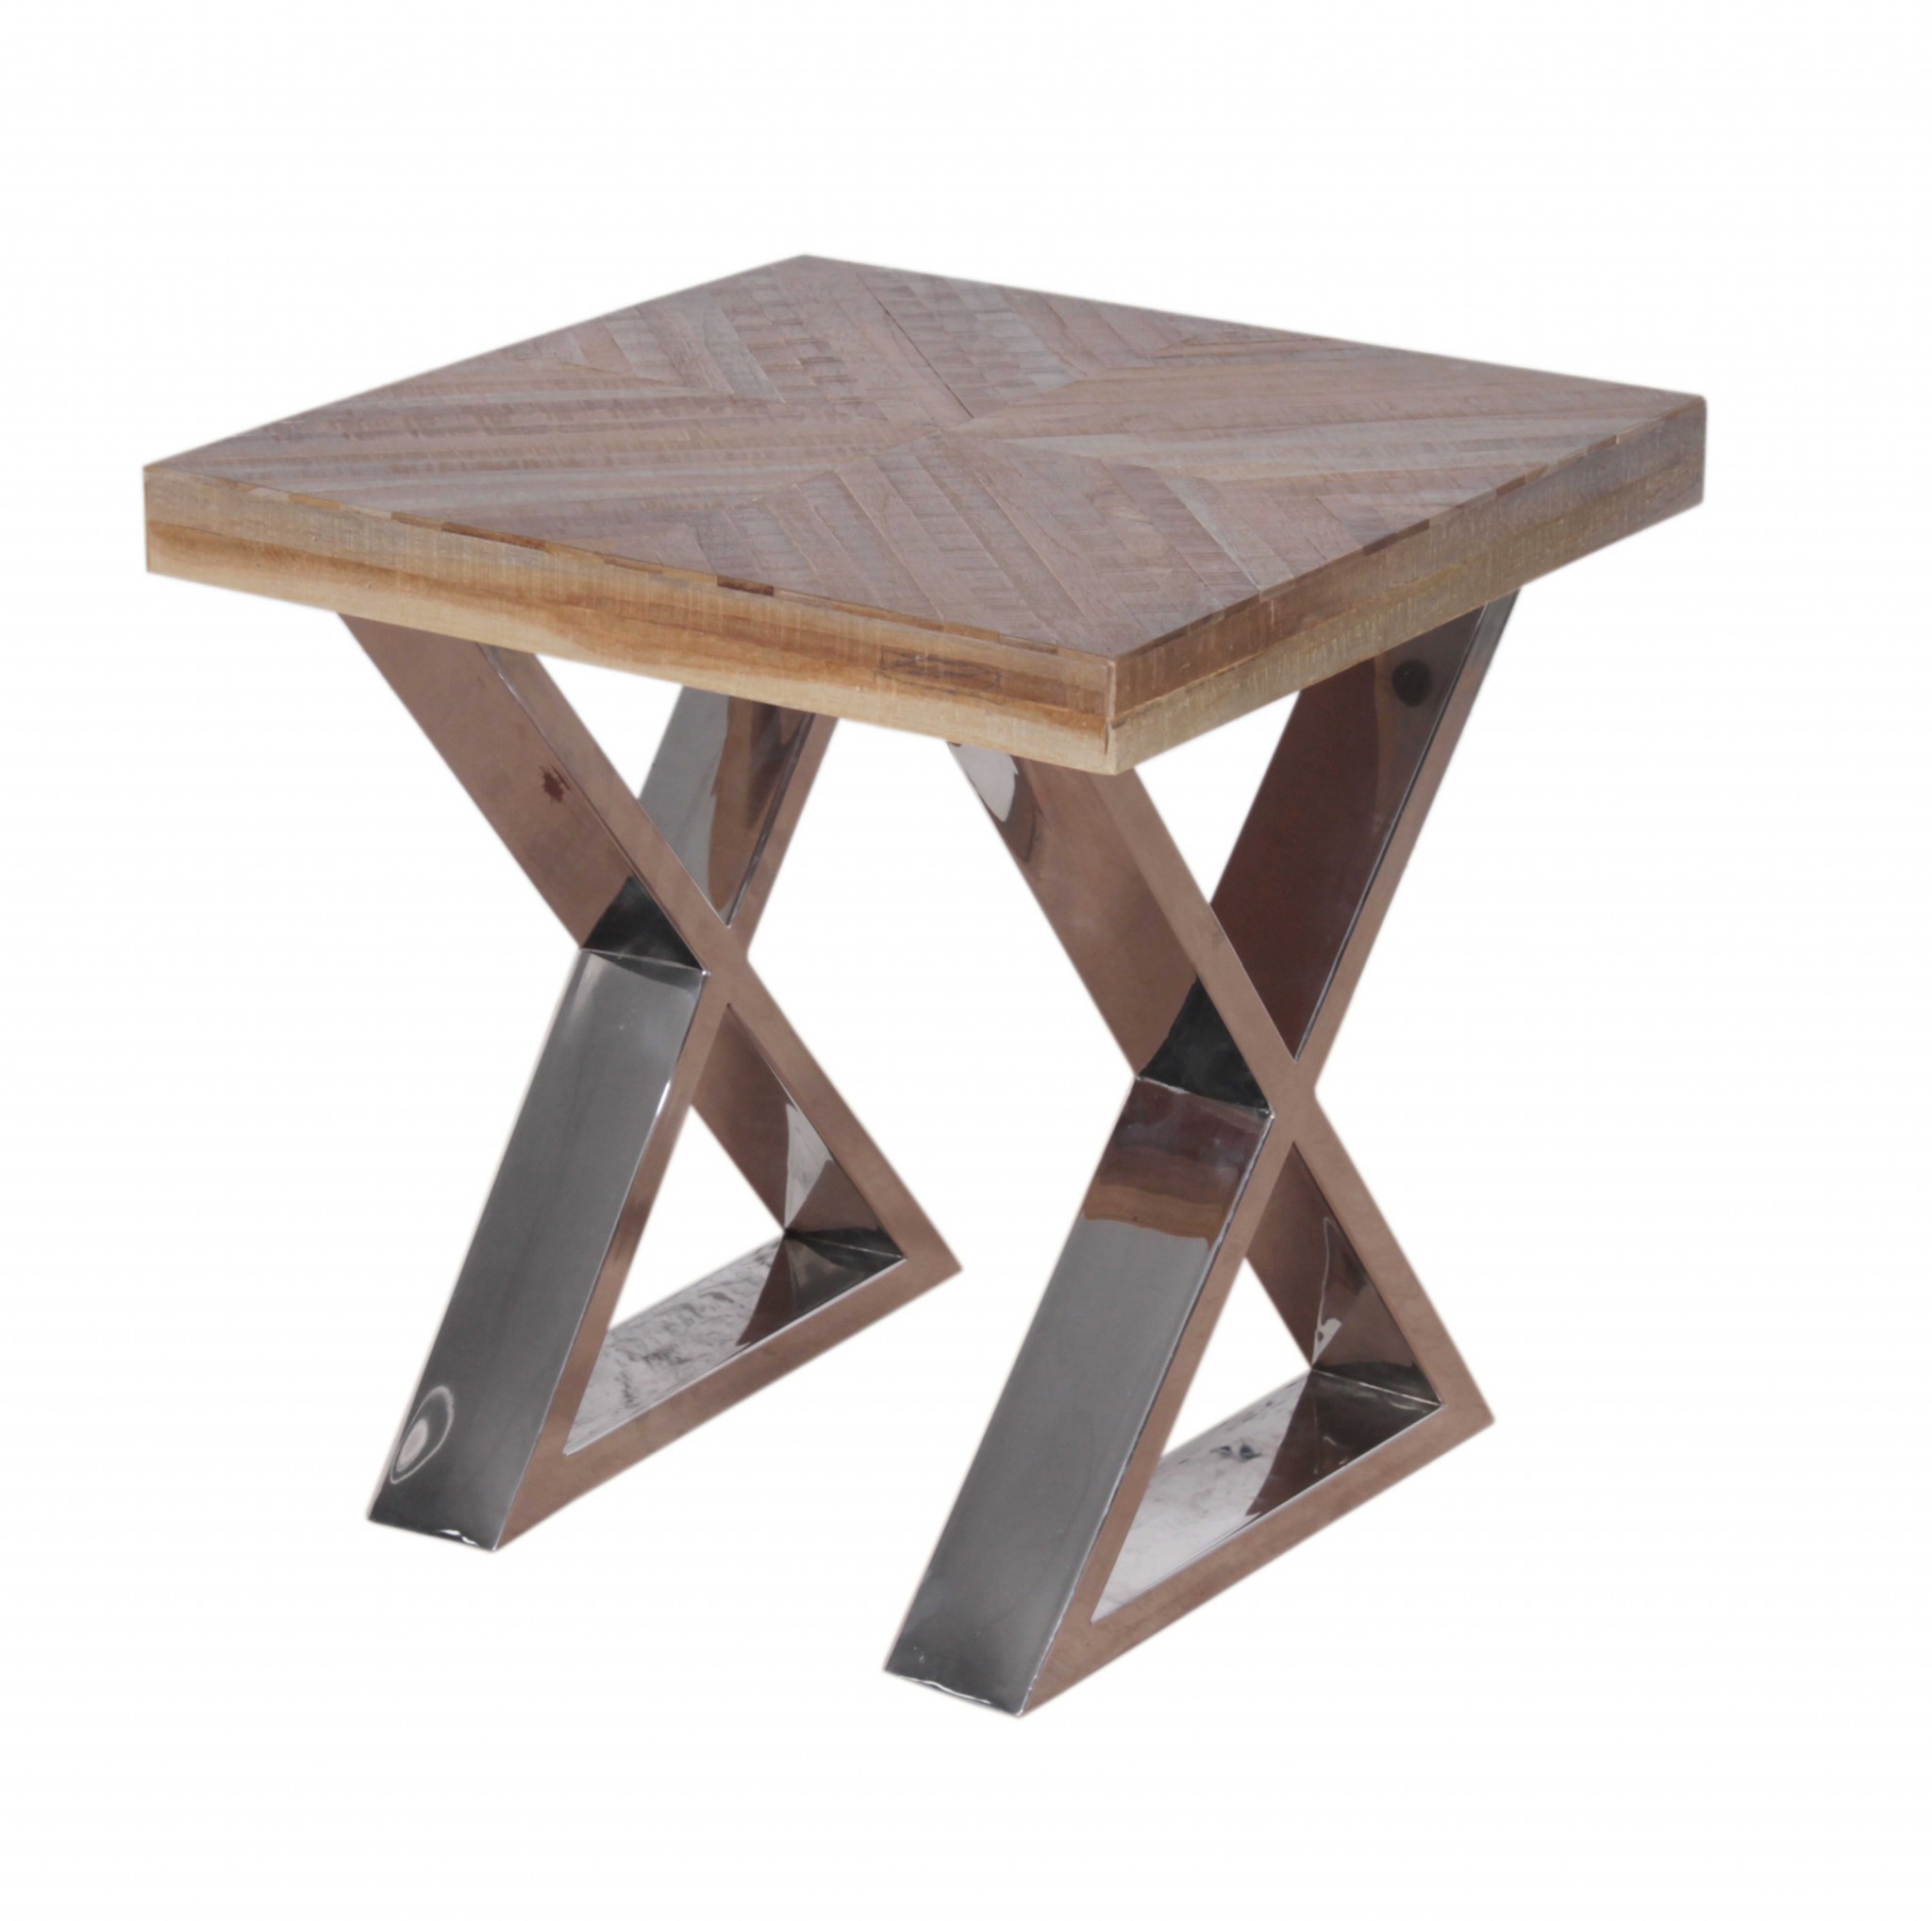 20" X 20" X 20" Multi Chrome Wood Metal Side Table